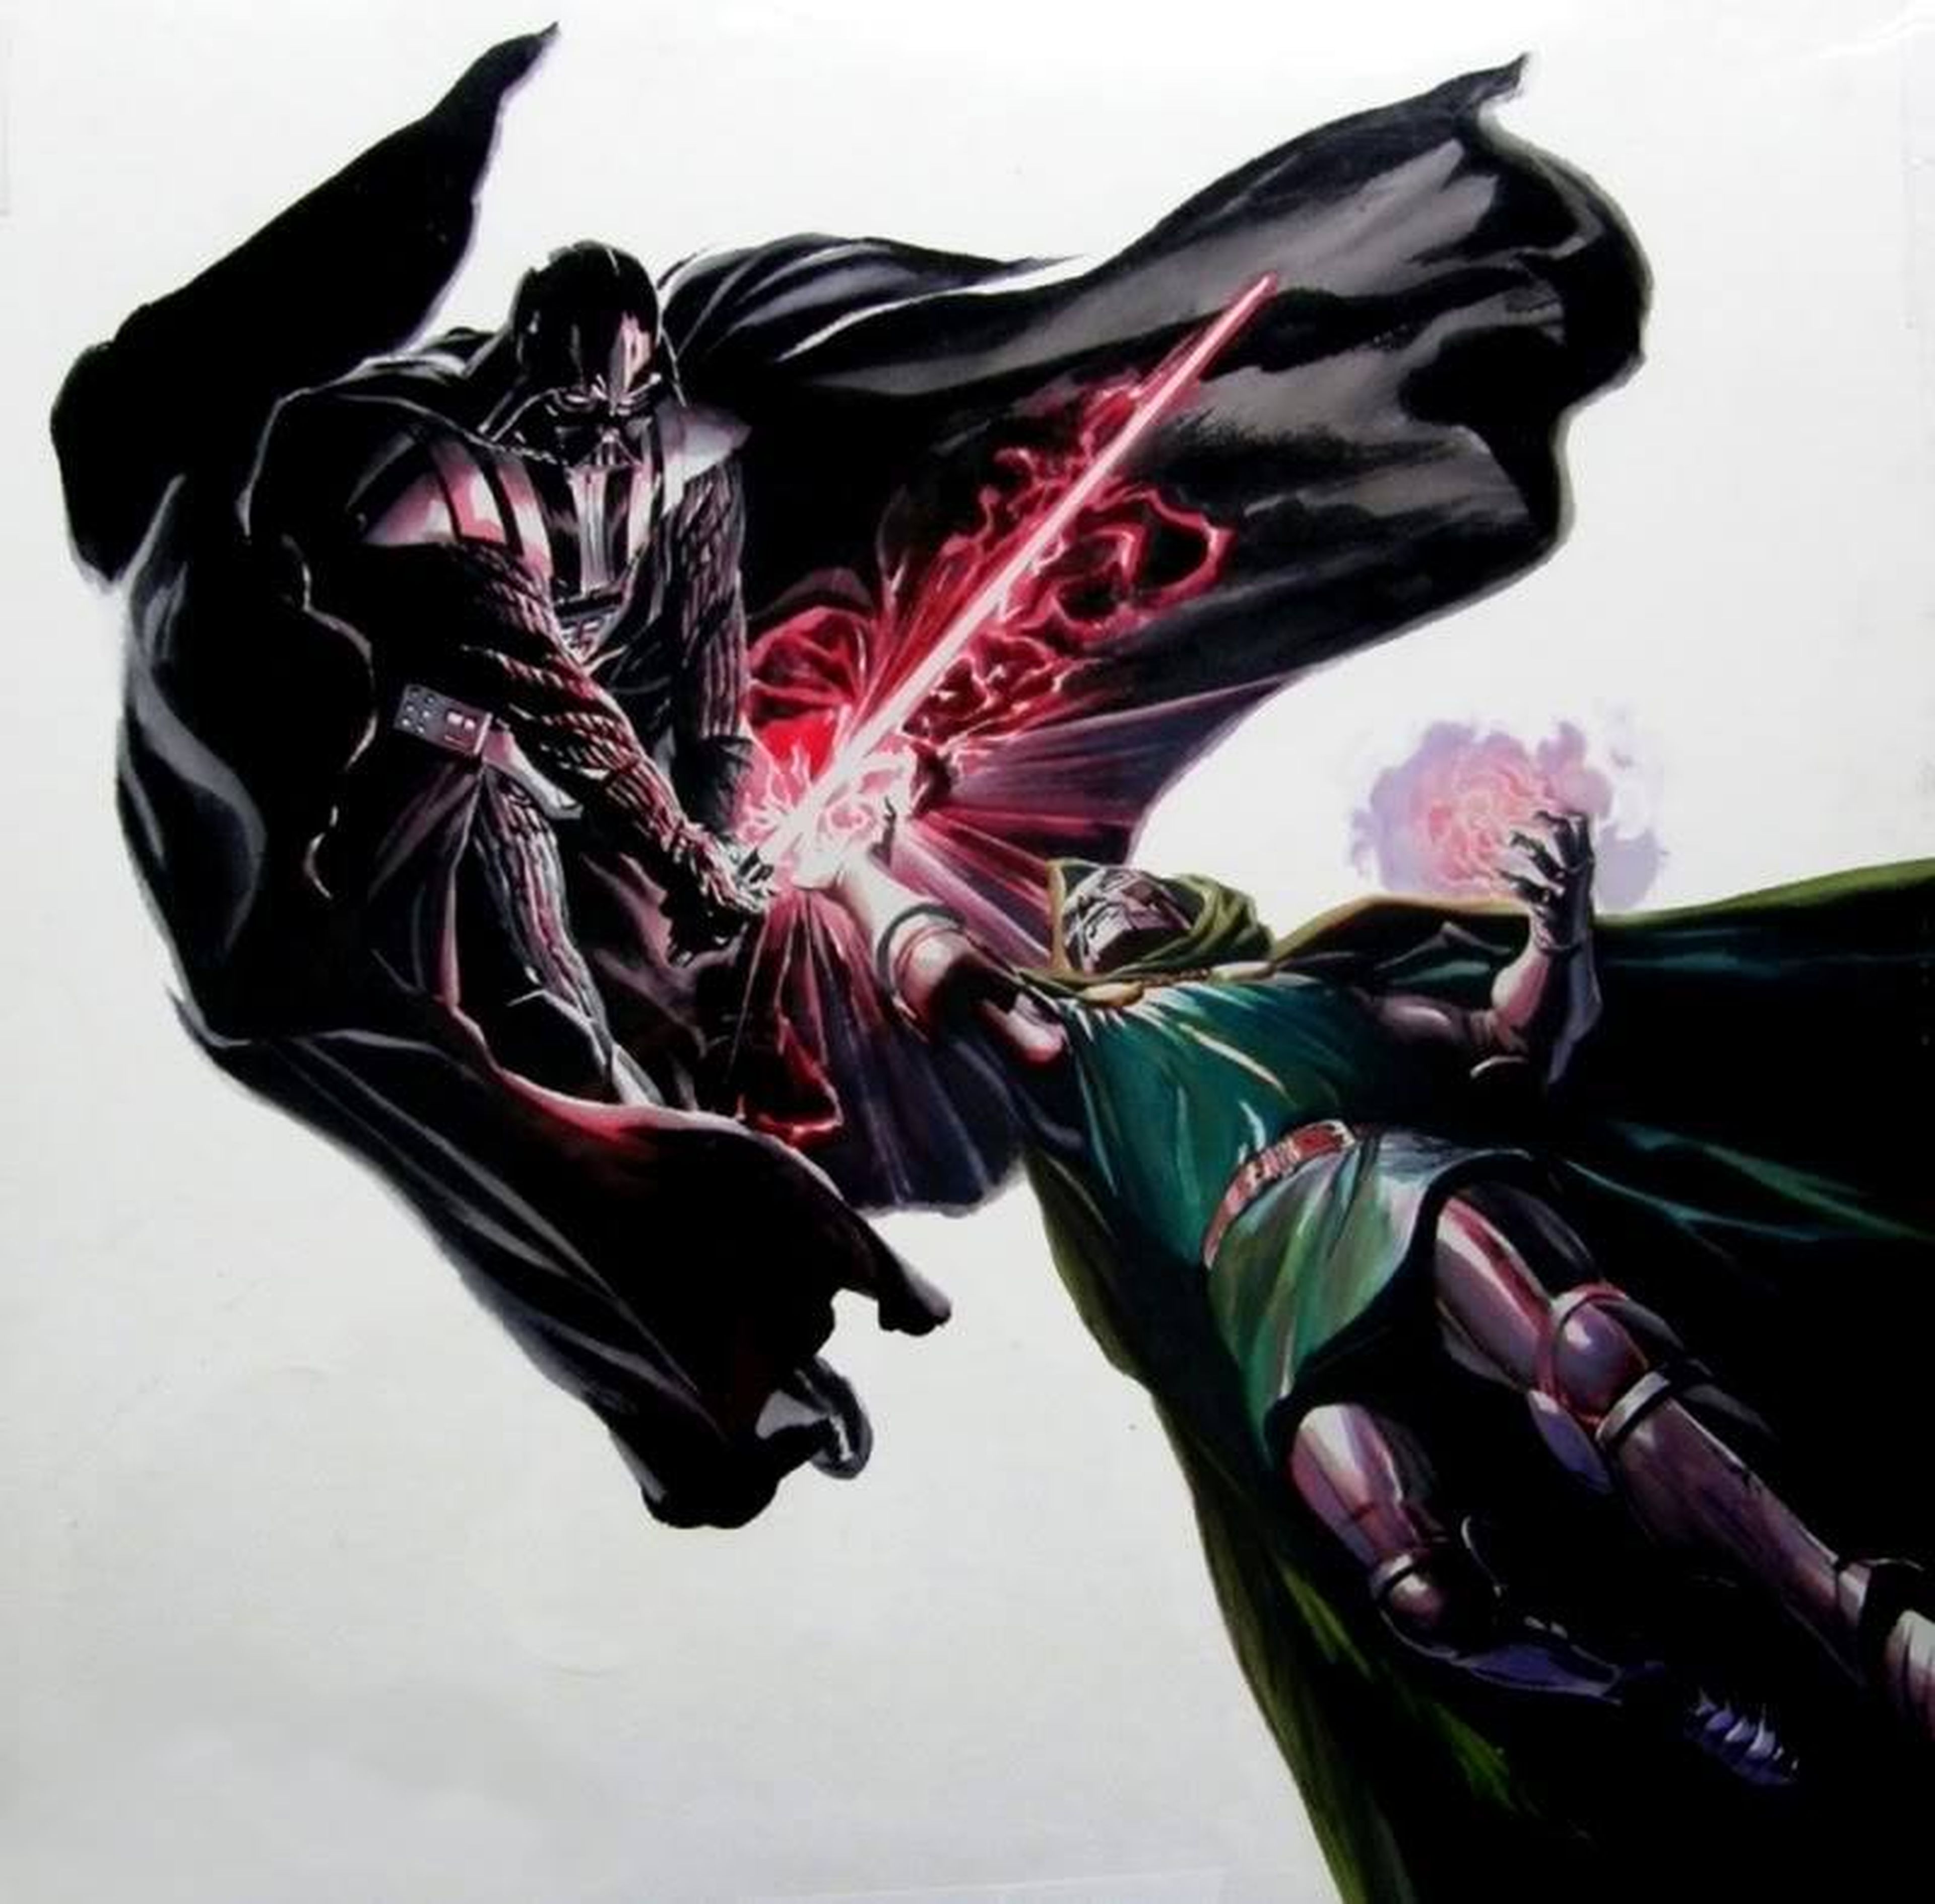 Alex Ross enfrenta a Darth Vader y al Doctor Muerte